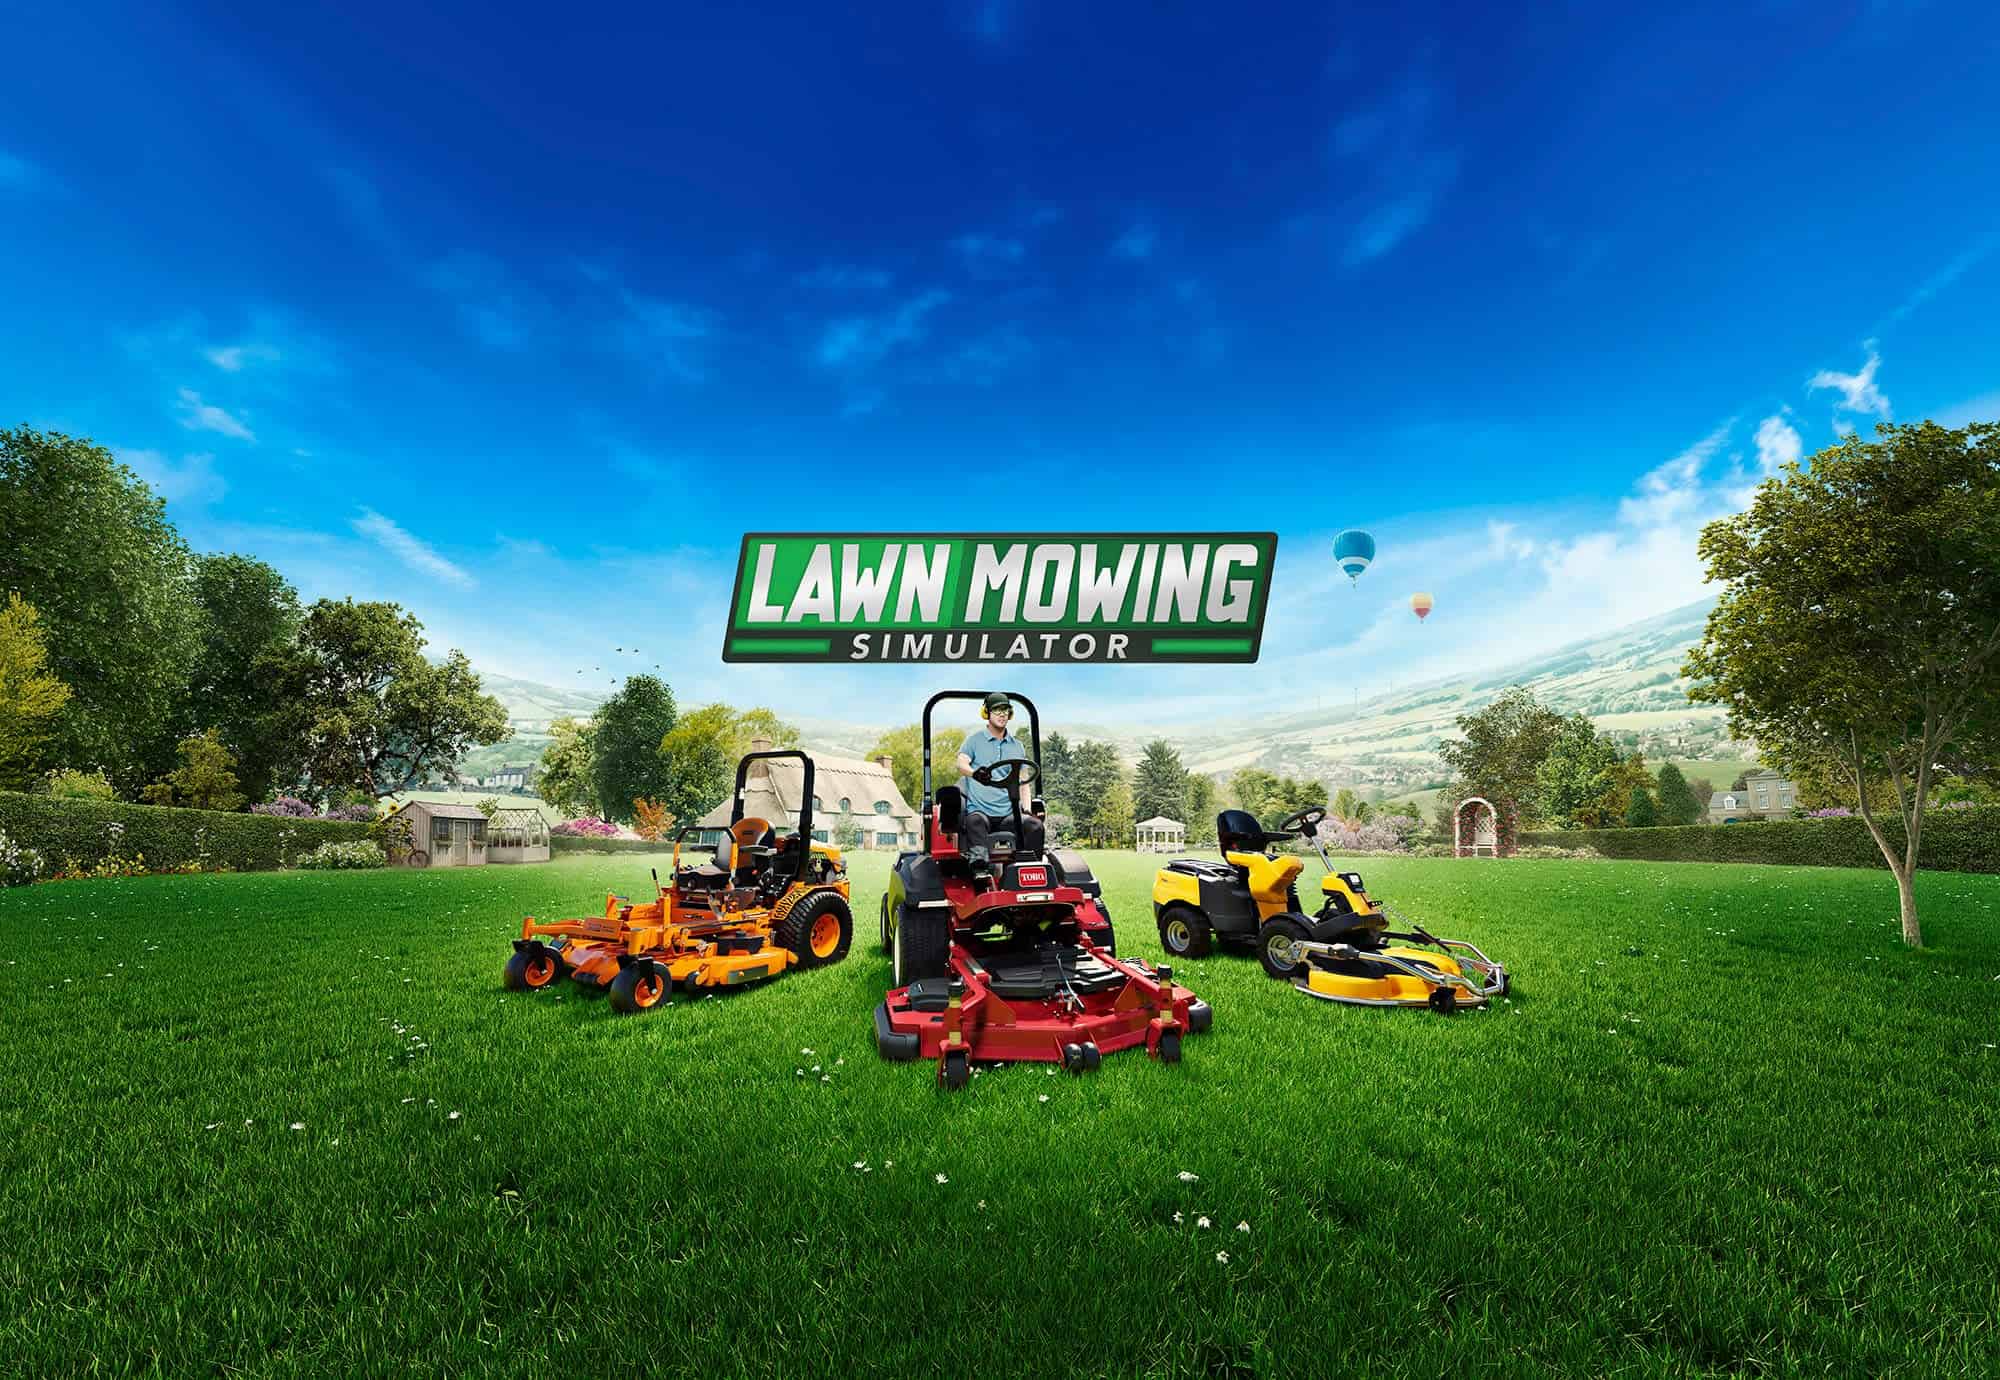 Lawn mowing simulator